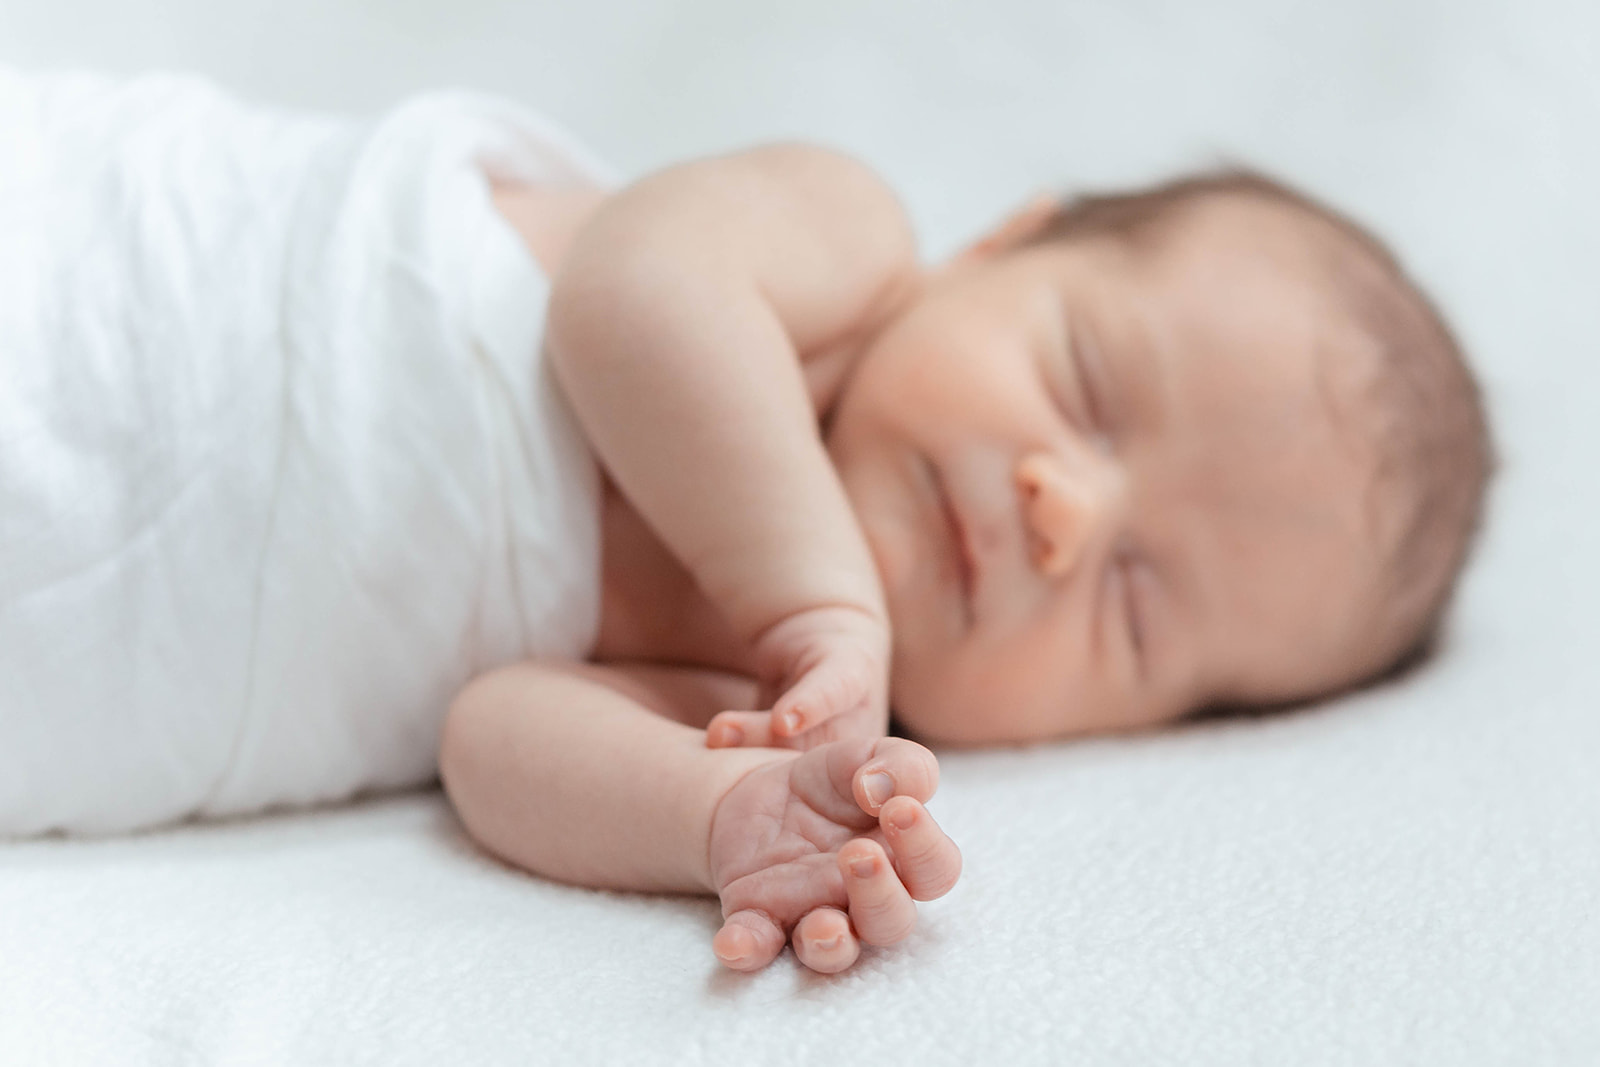 Details of a sleeping newborn baby's hands night nurse columbus ohio